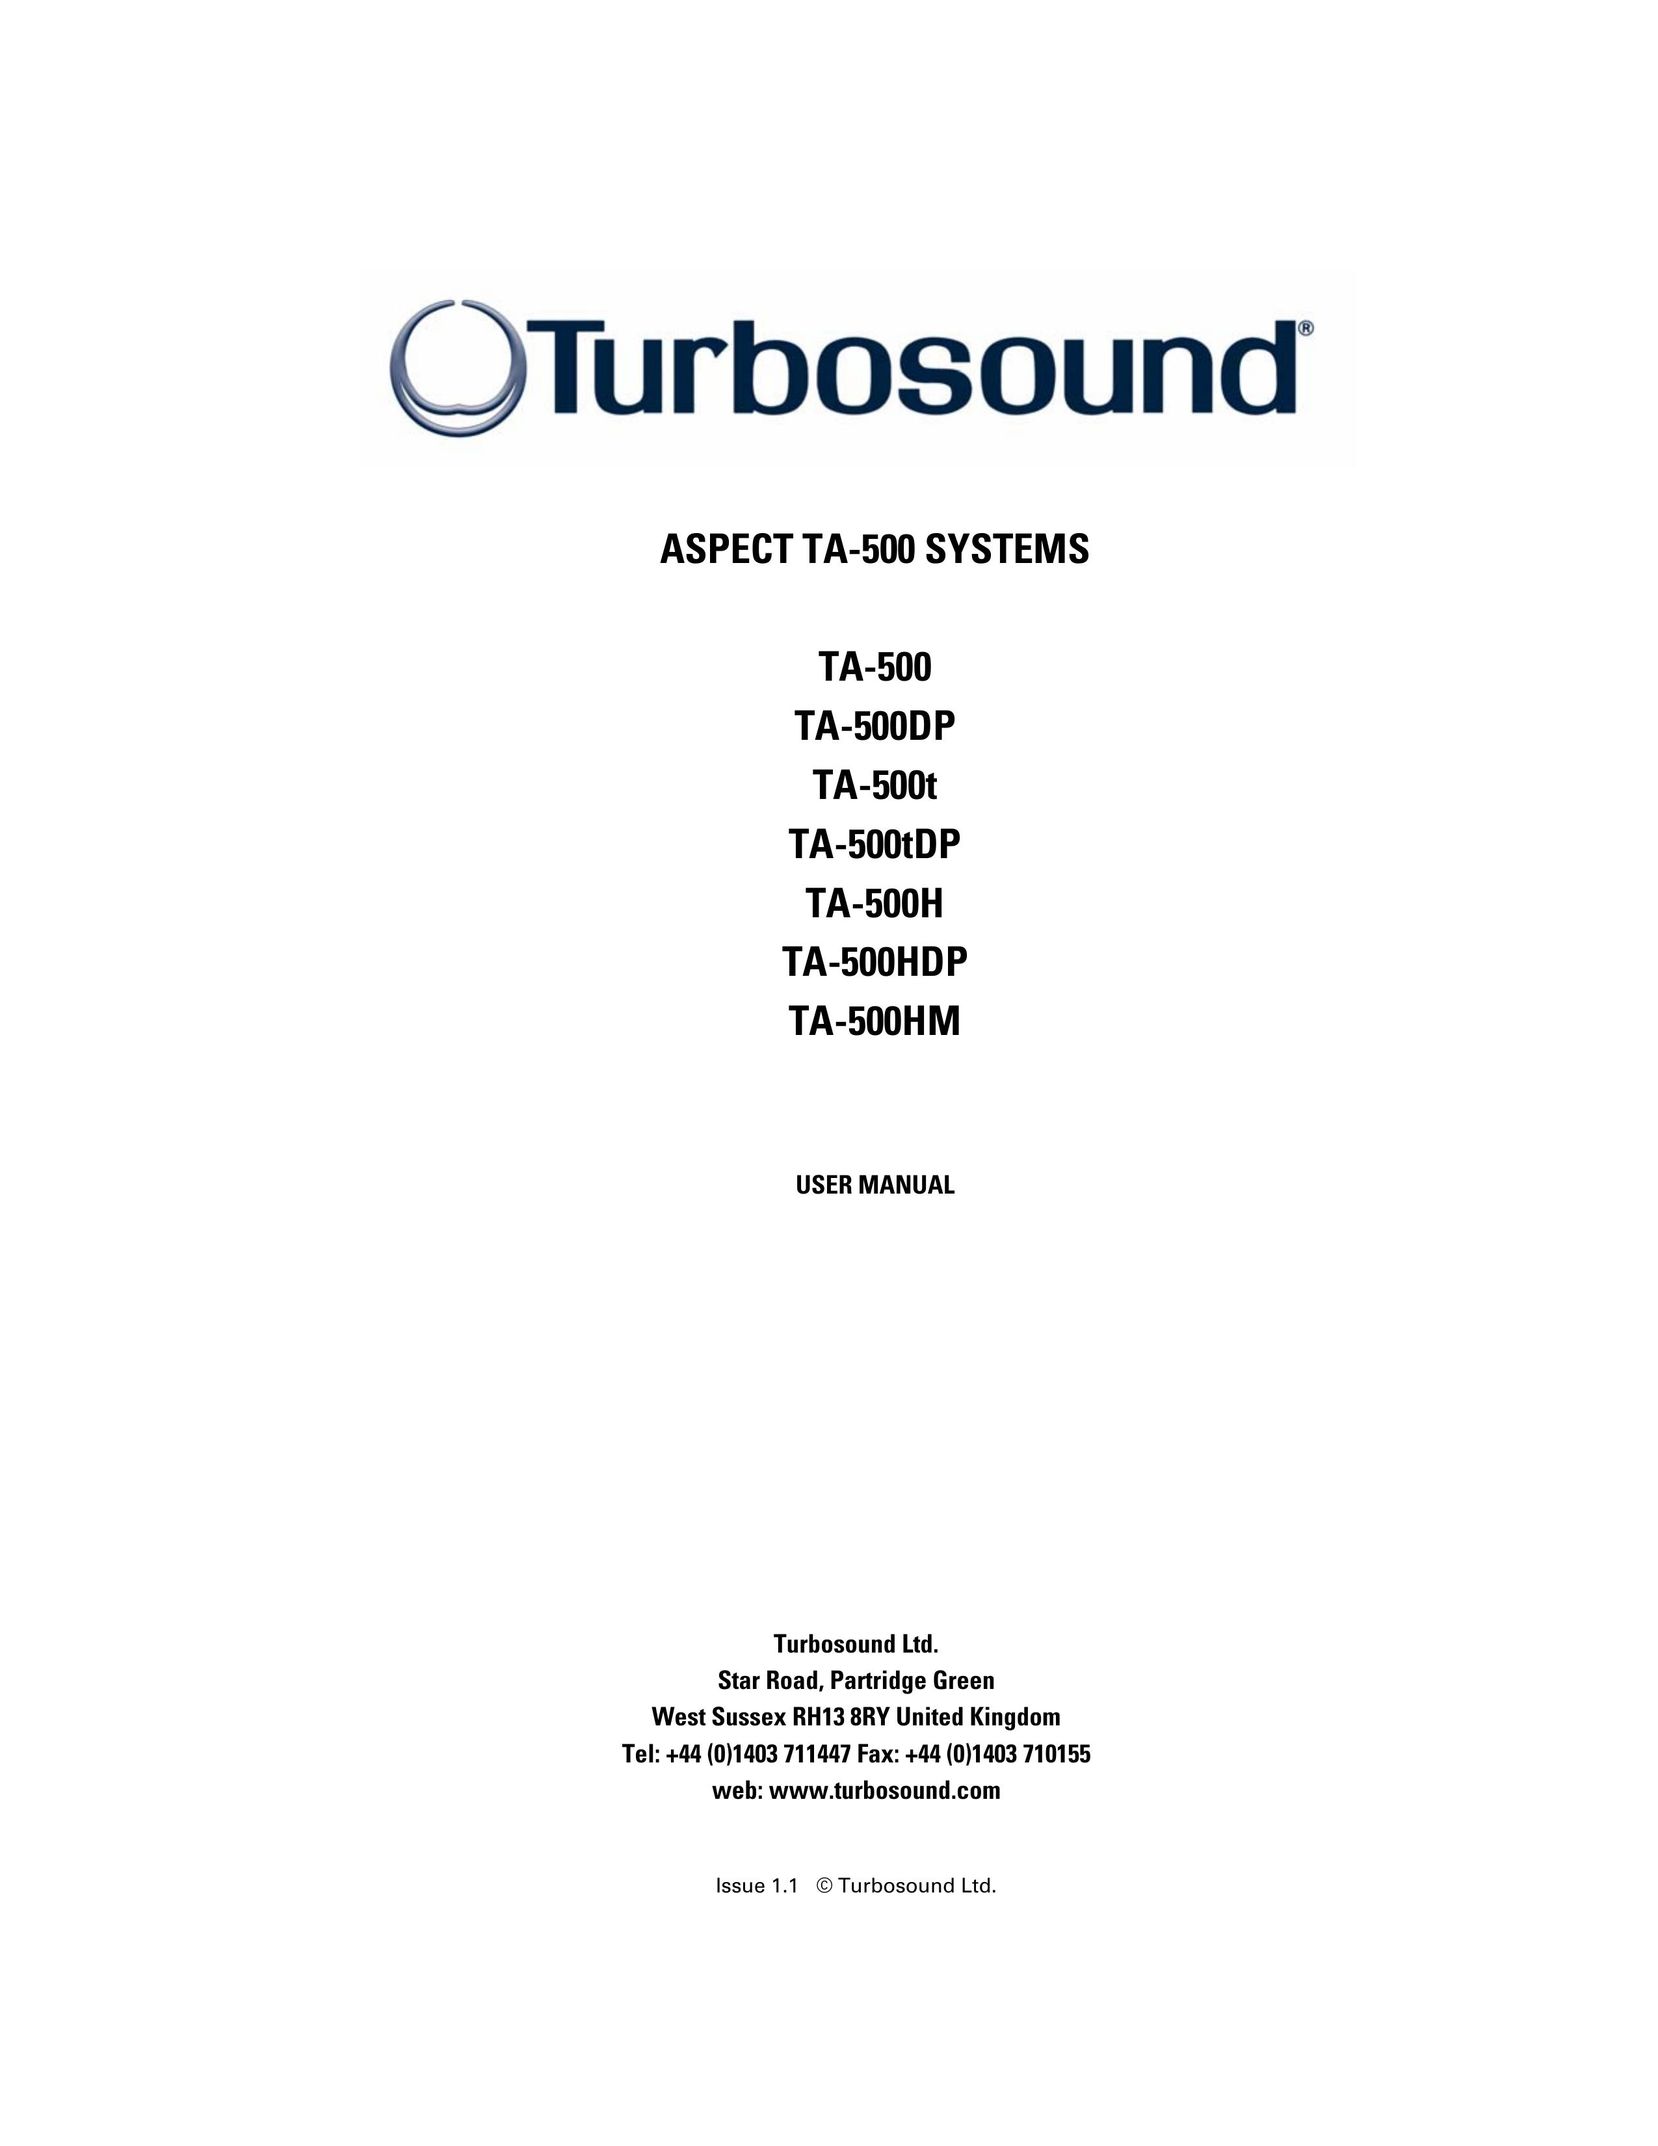 Turbosound TA-500TDP Speaker User Manual